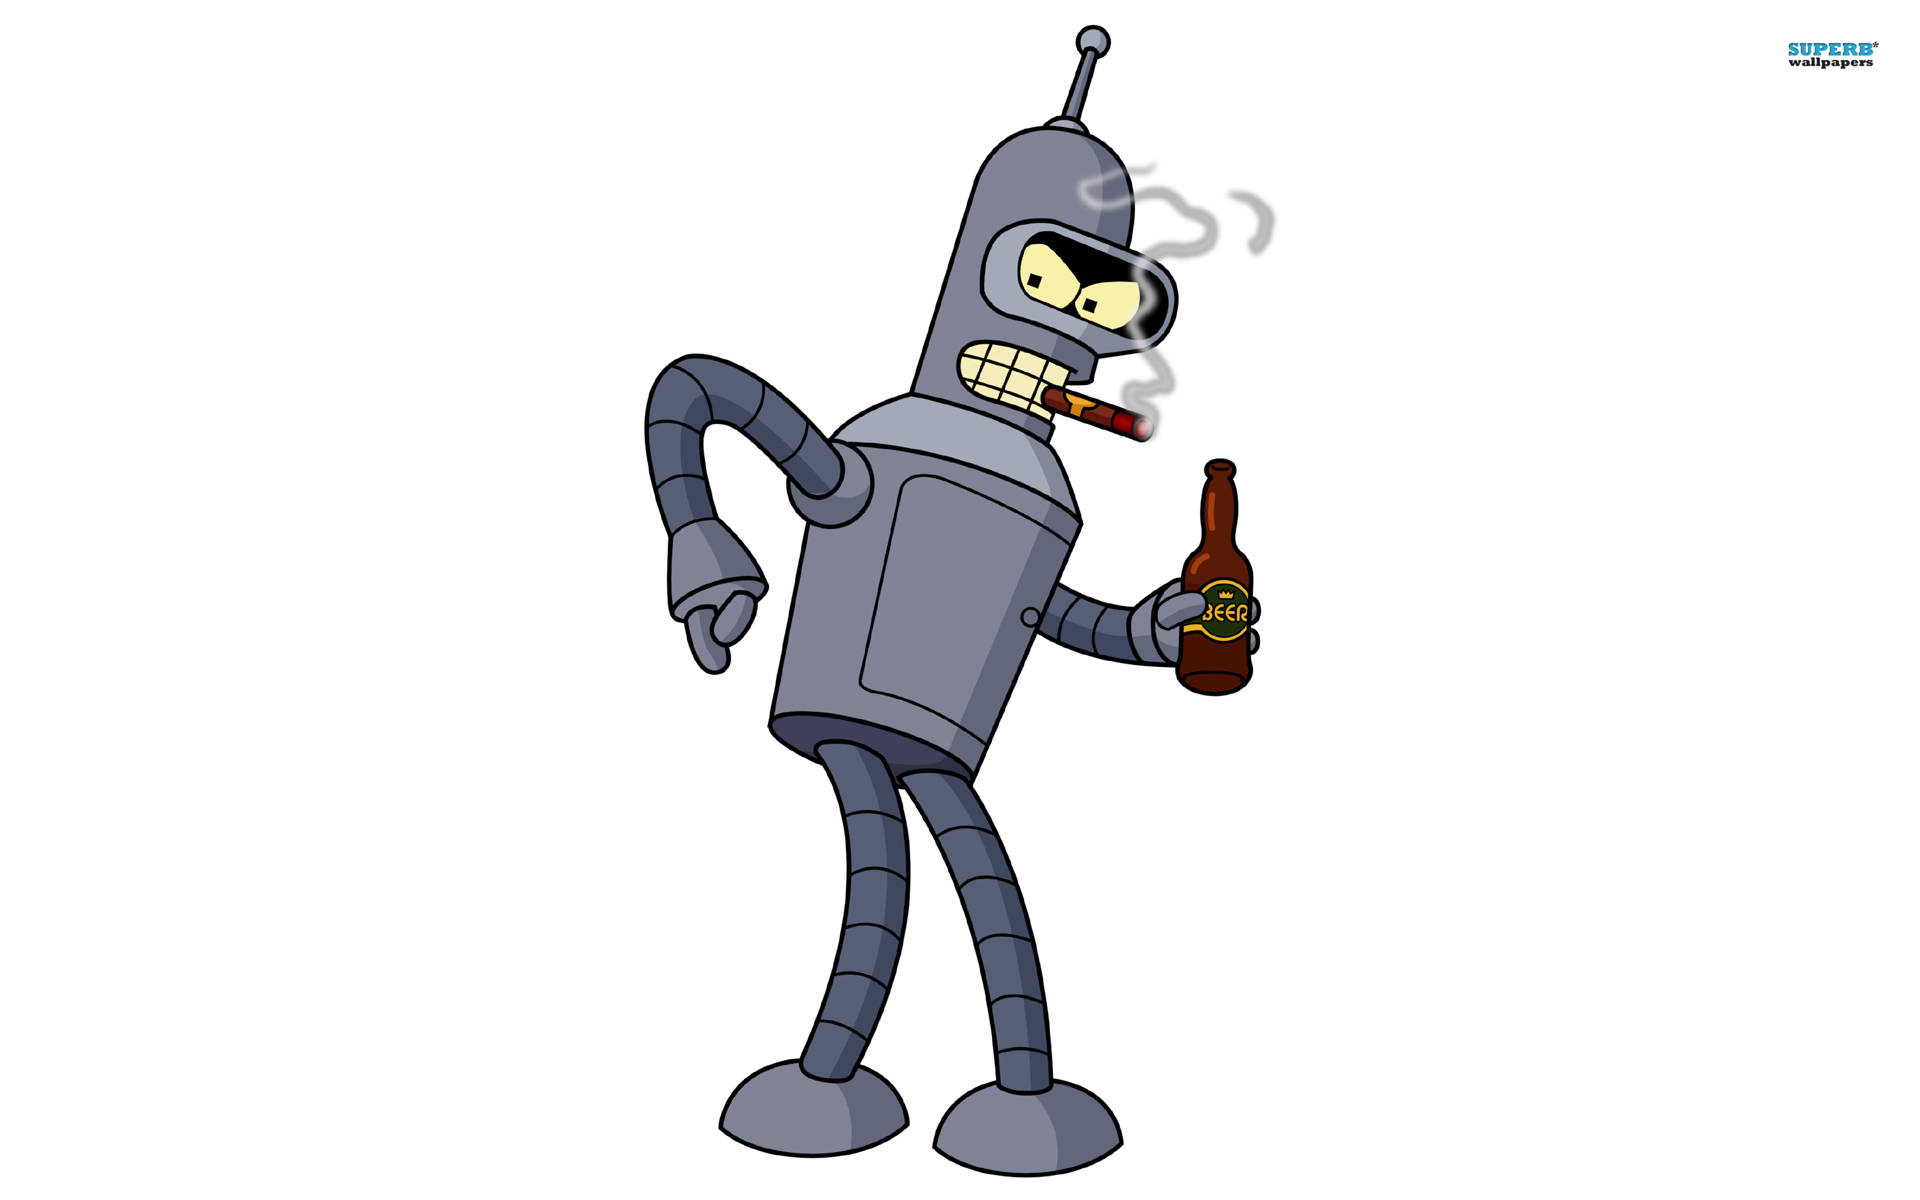 Futurama Bender With Beer Bottle Wallpaper